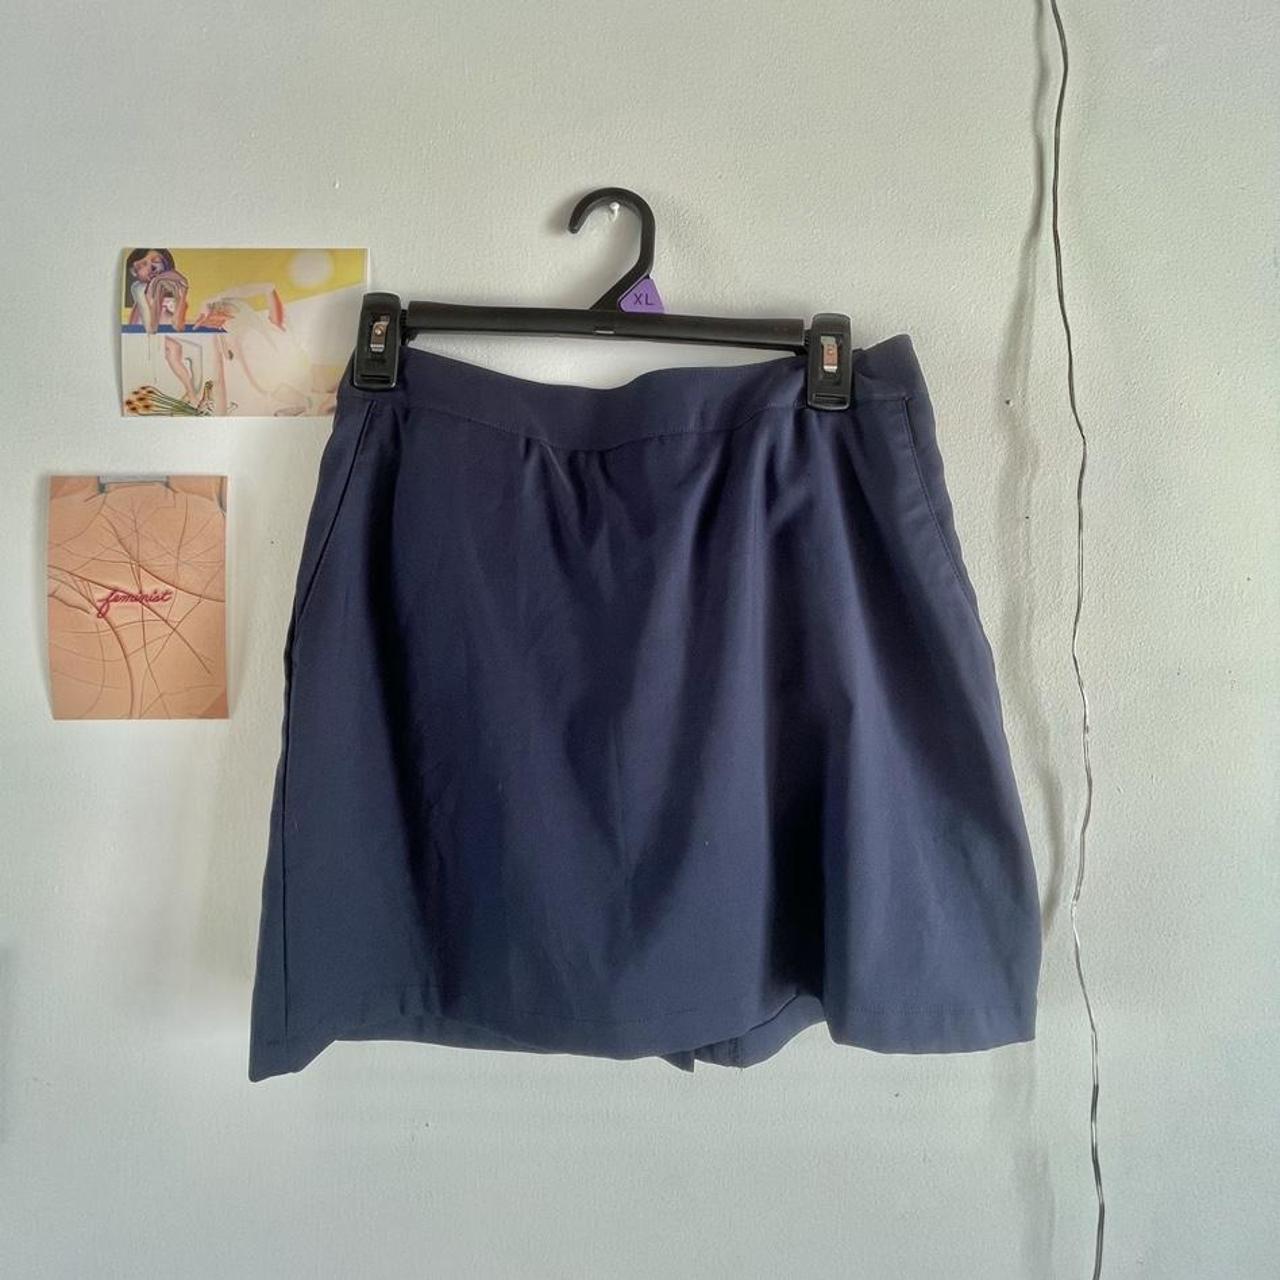 Product Image 1 - Super cute shirt tennis skirt!